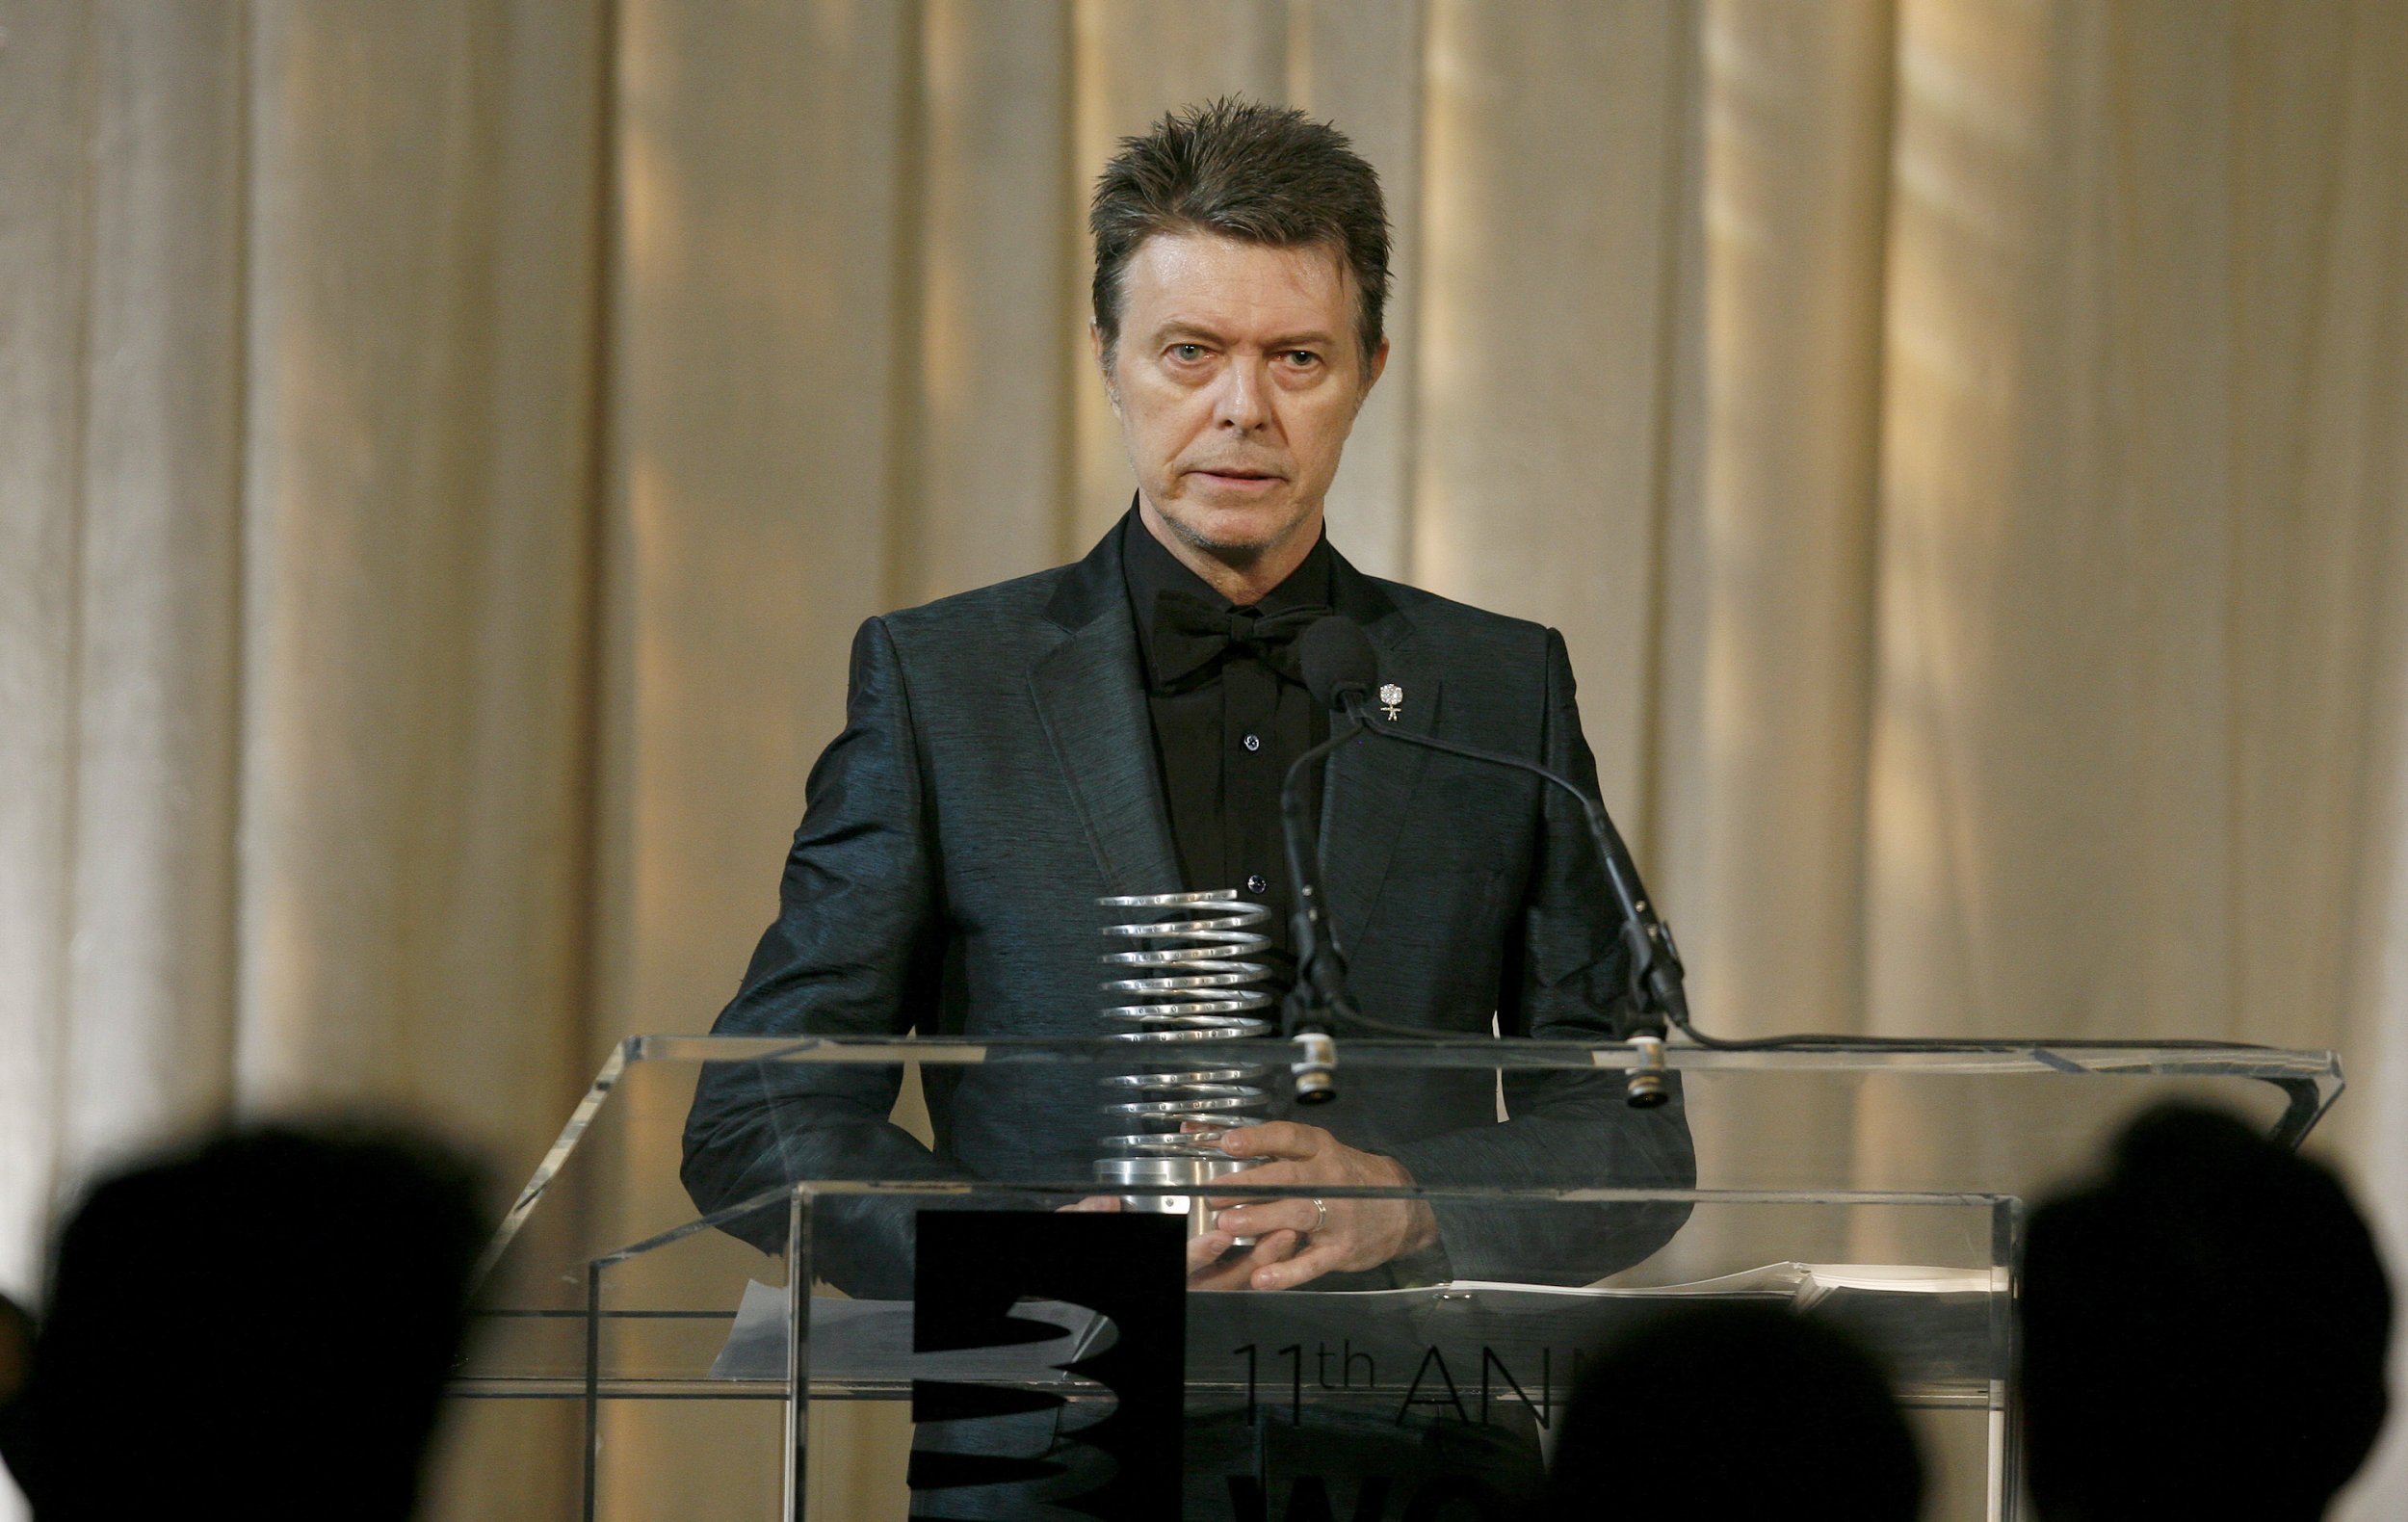 Singer David Bowie receives the Webby Lifetime Achievement award 